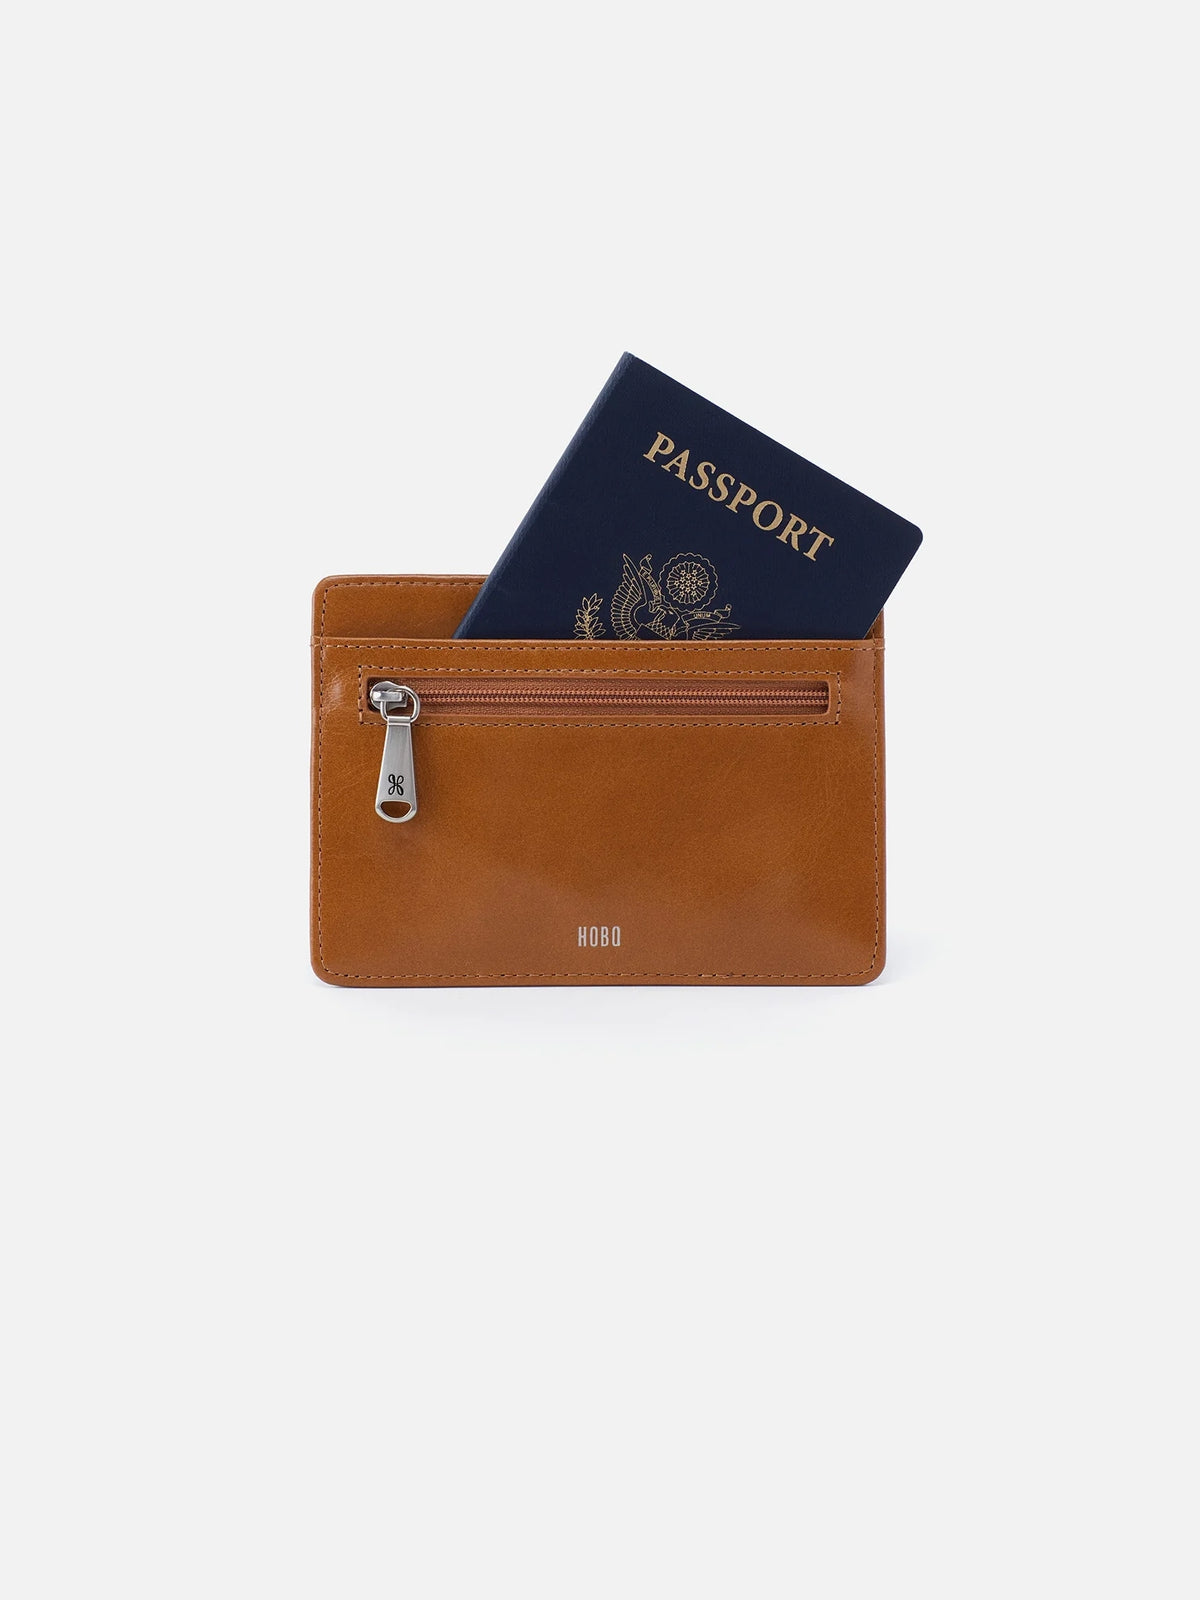 hobo euro slide card case holder in truffle polished leather